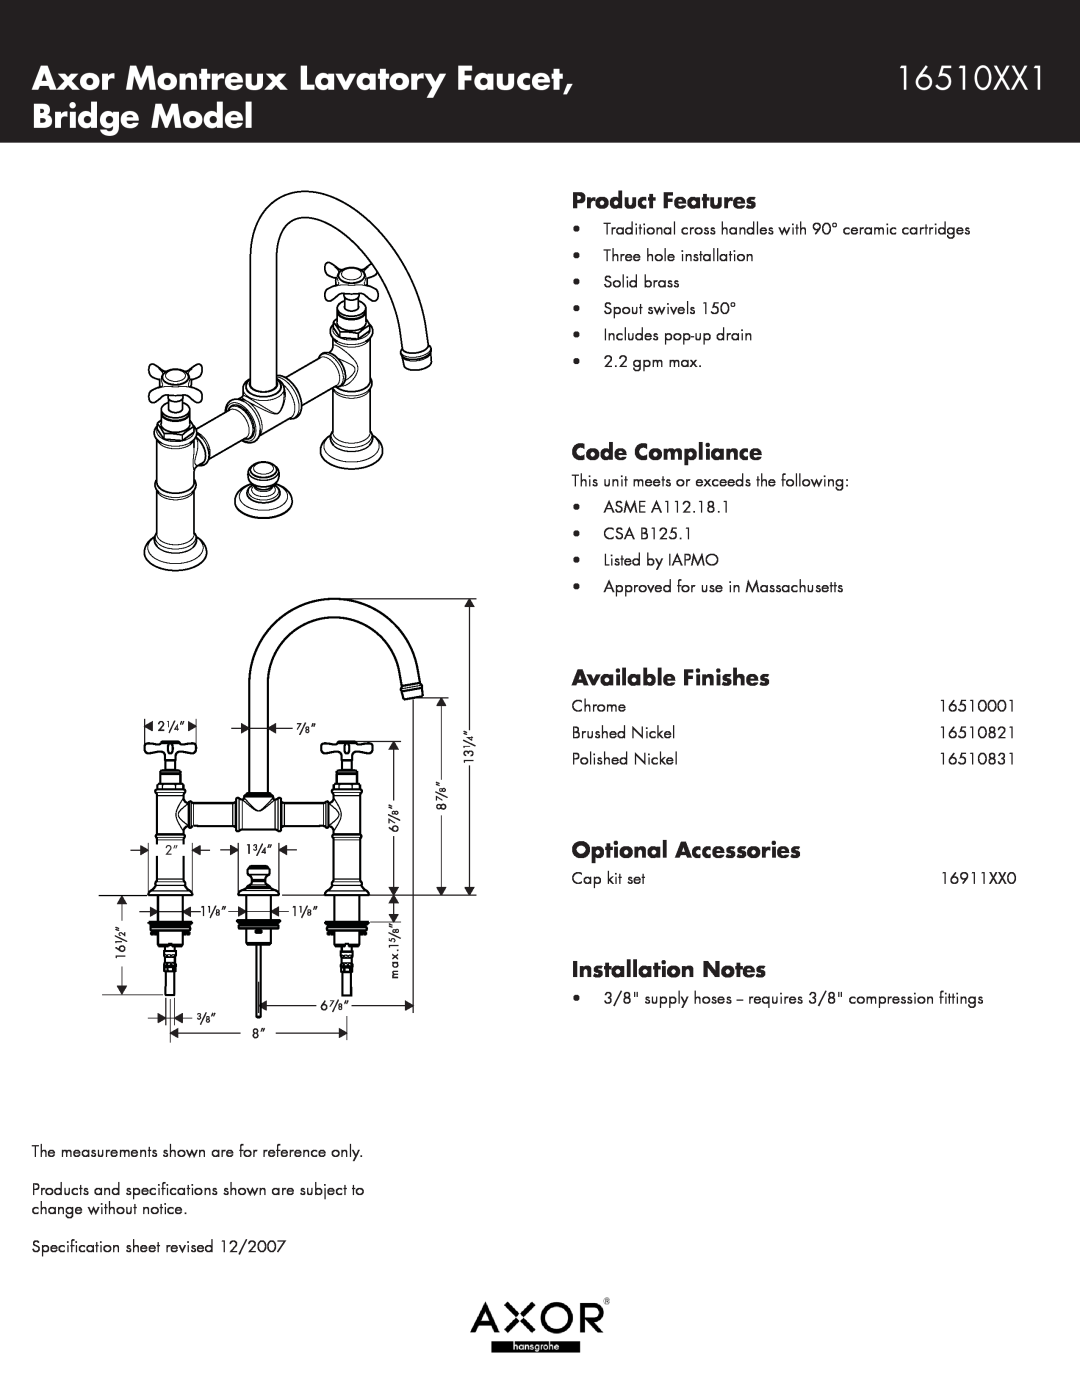 Axor 16510001 specifications Axor Montreux Lavatory Faucet, 16510XX1, Bridge Model, Product Features, Code Compliance 